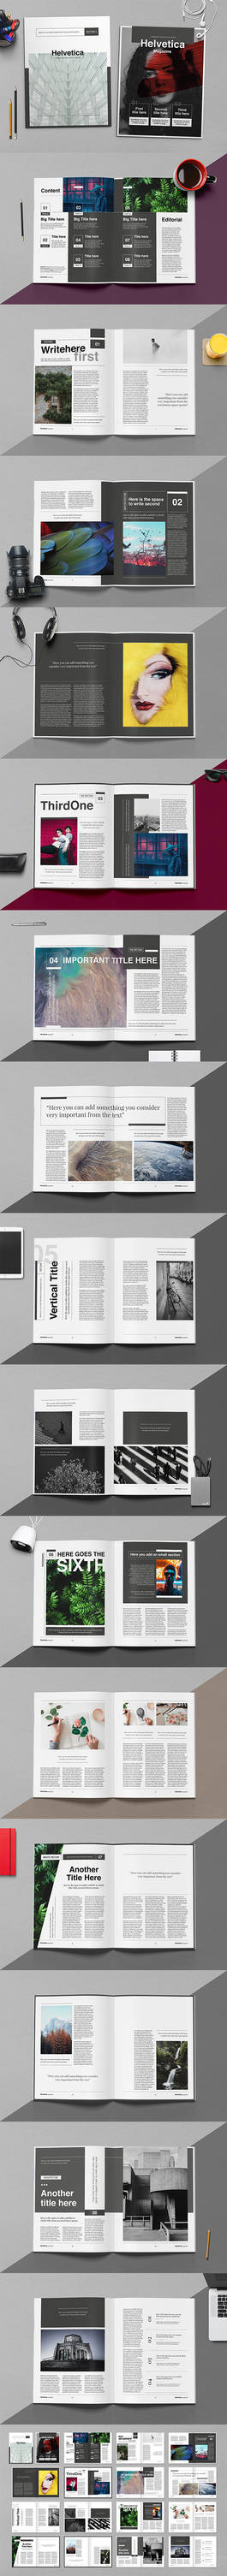 Helvetica Magazine Indesign Template